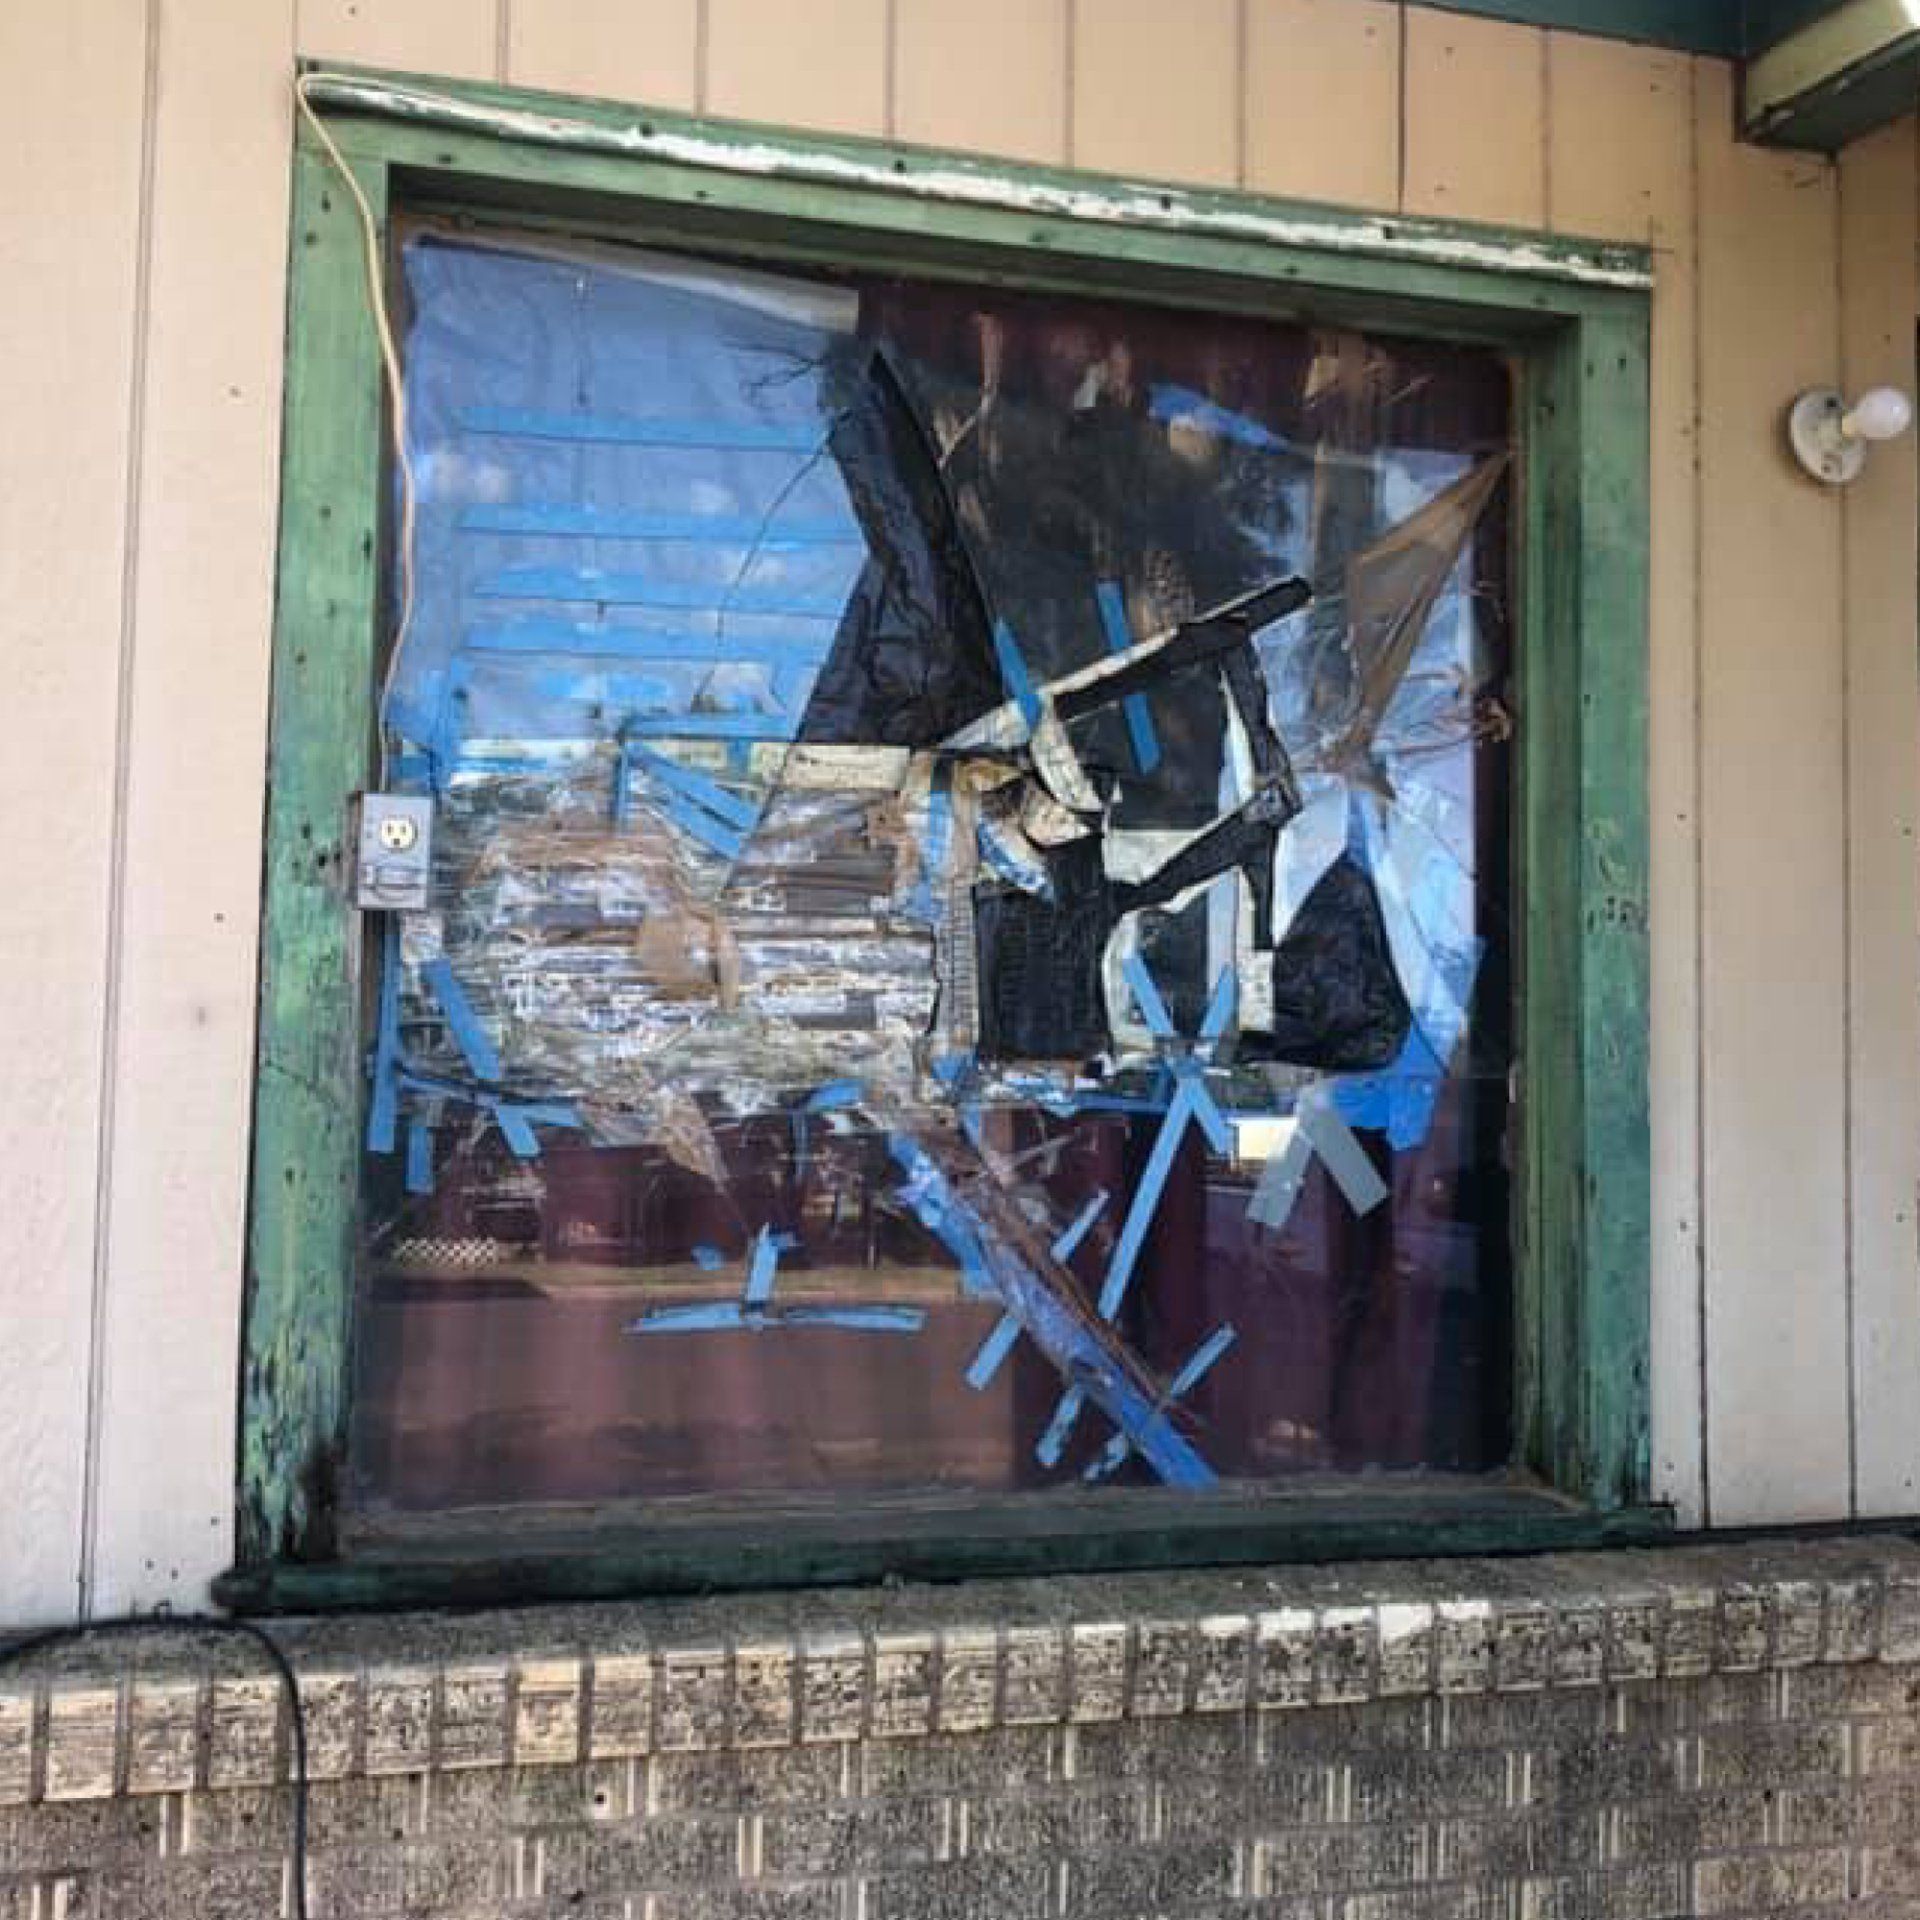 Window replacement andrews TX